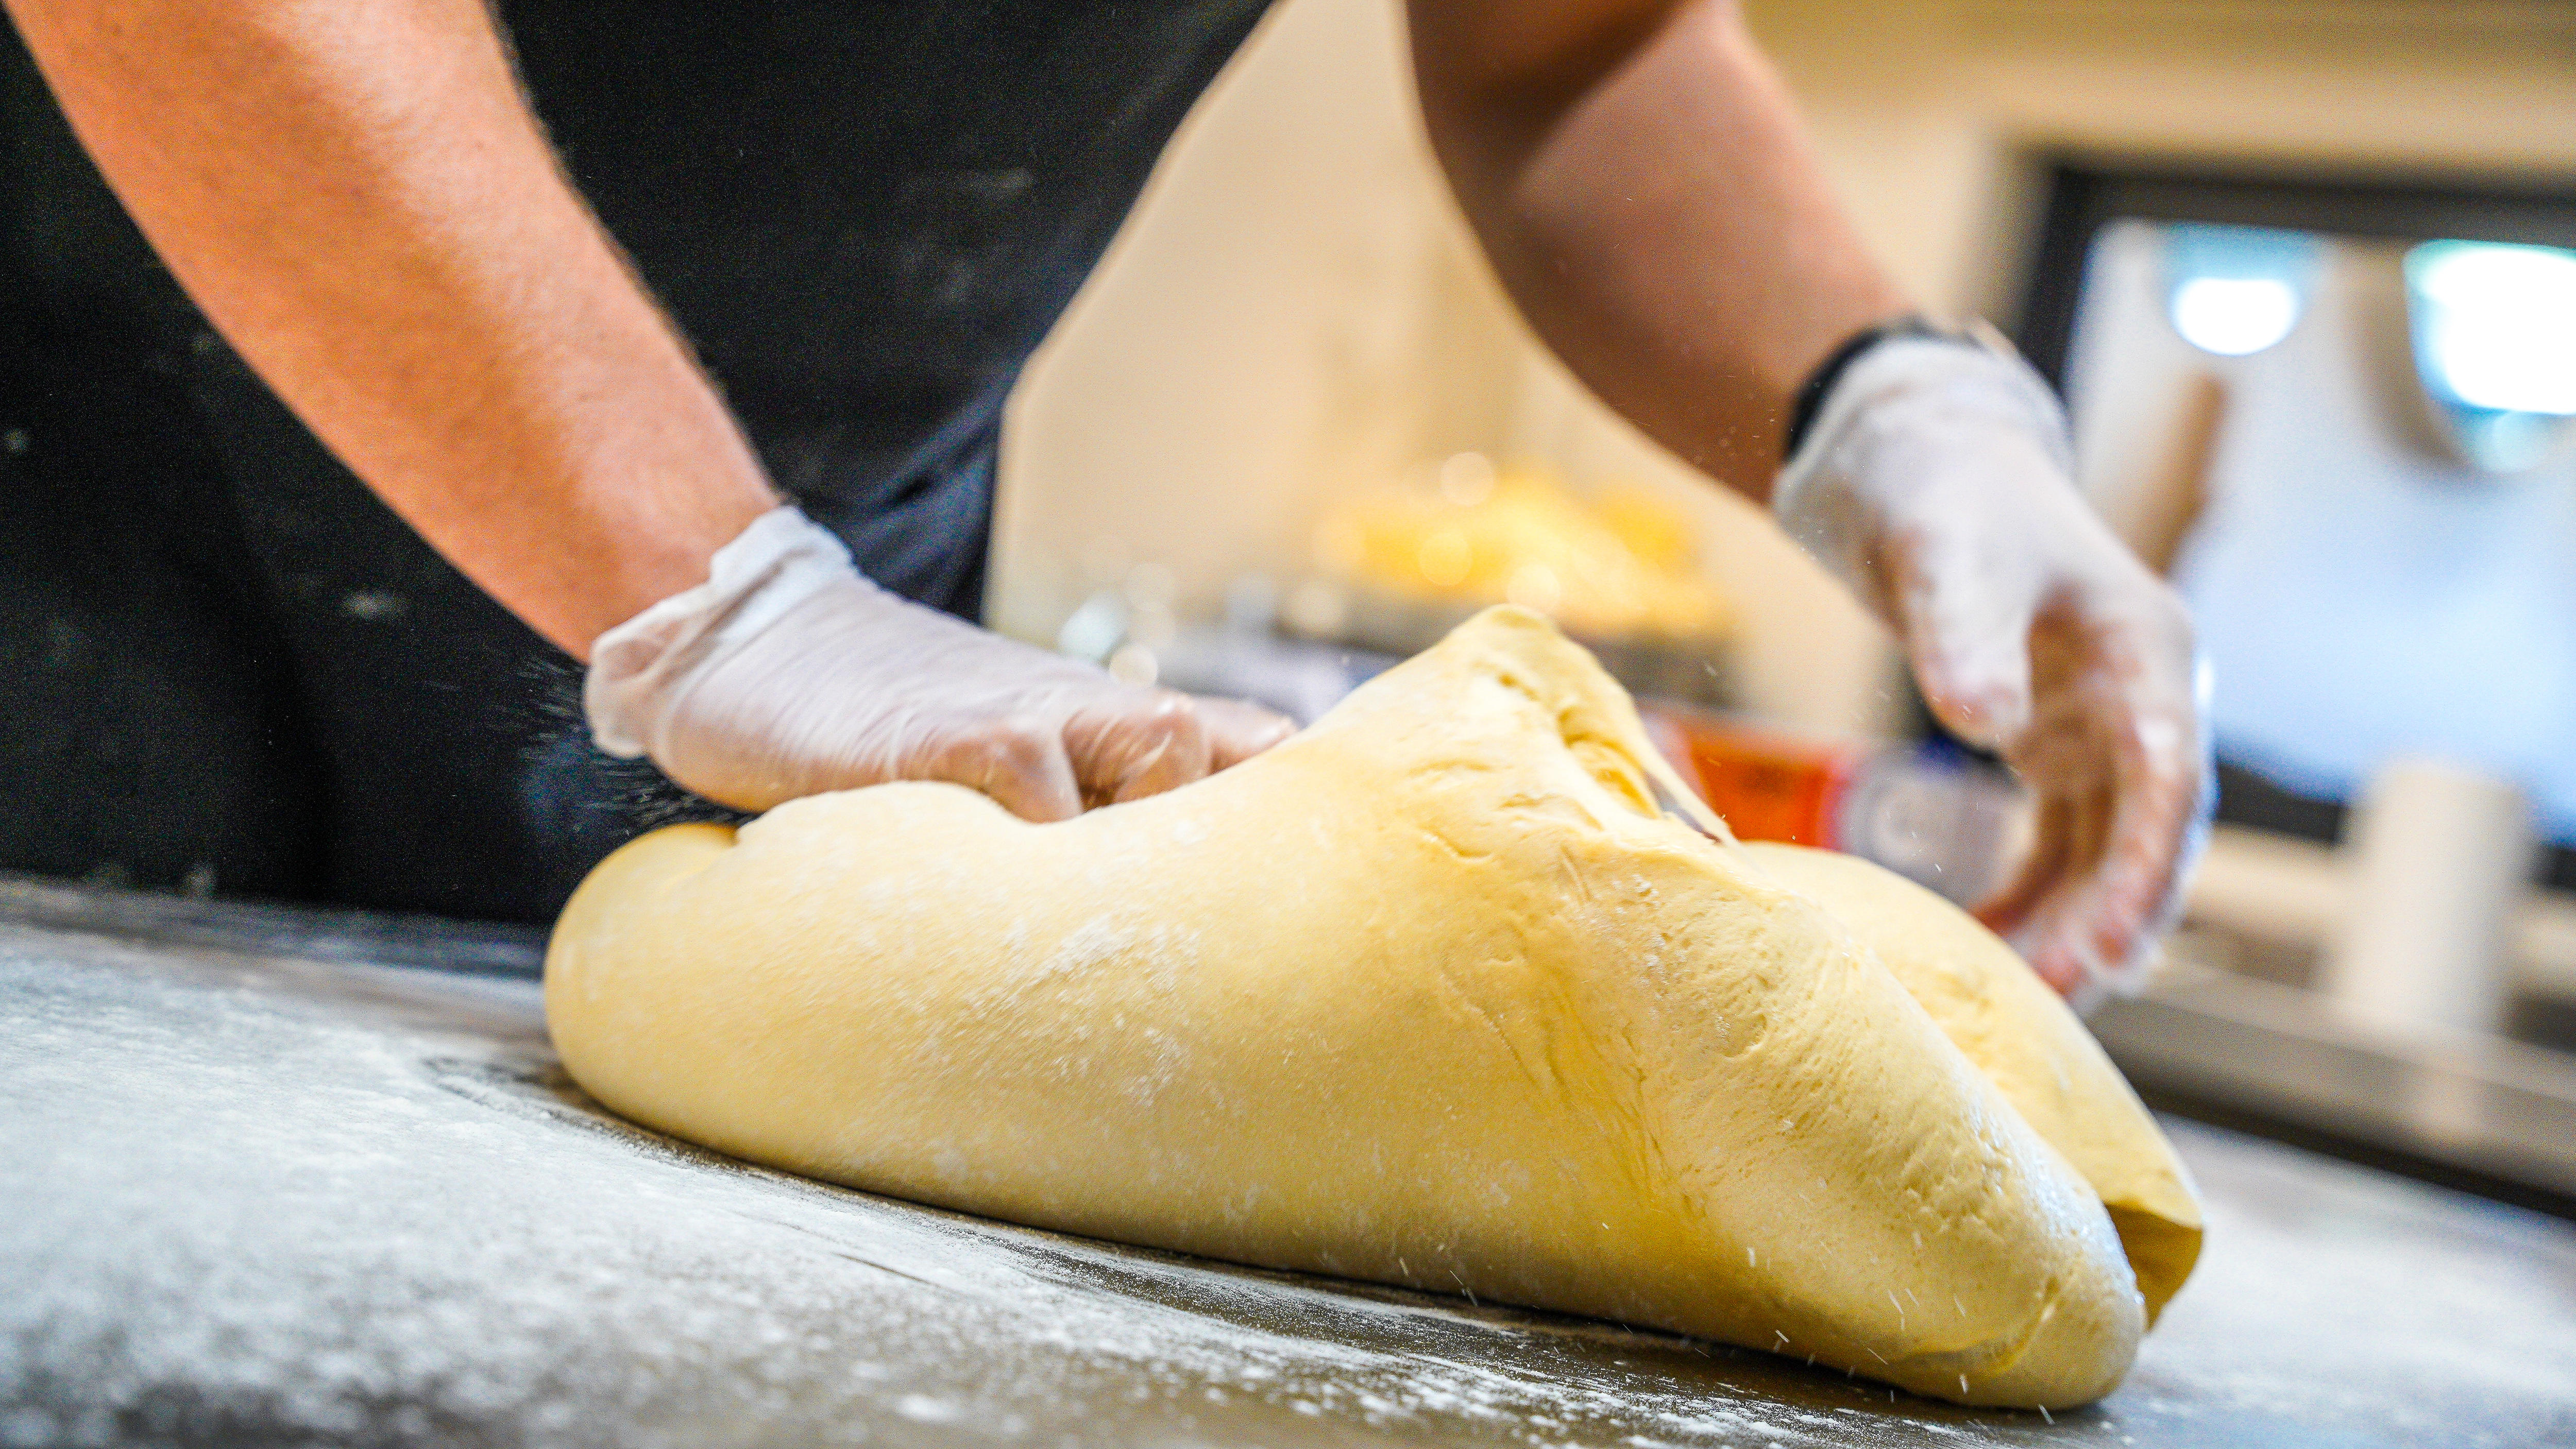 Baker kneading dough to make bread